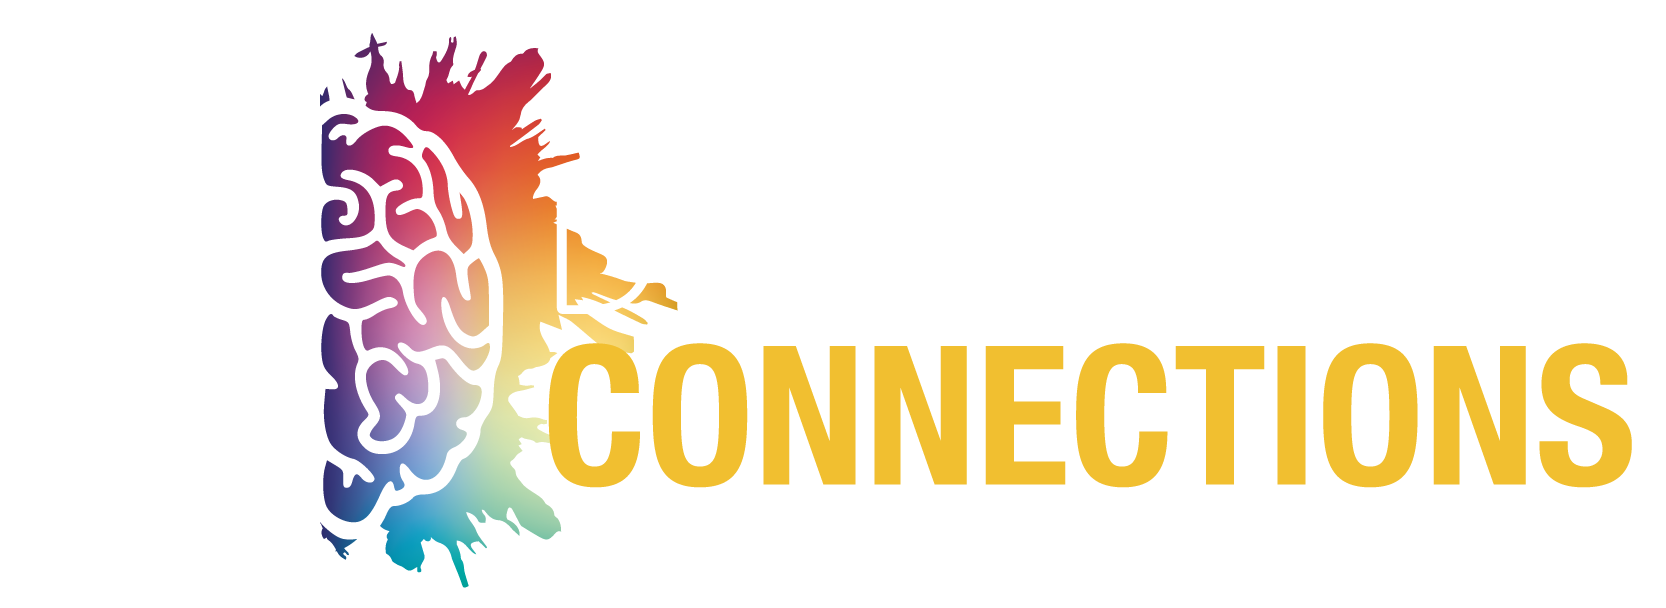 Designer Connections